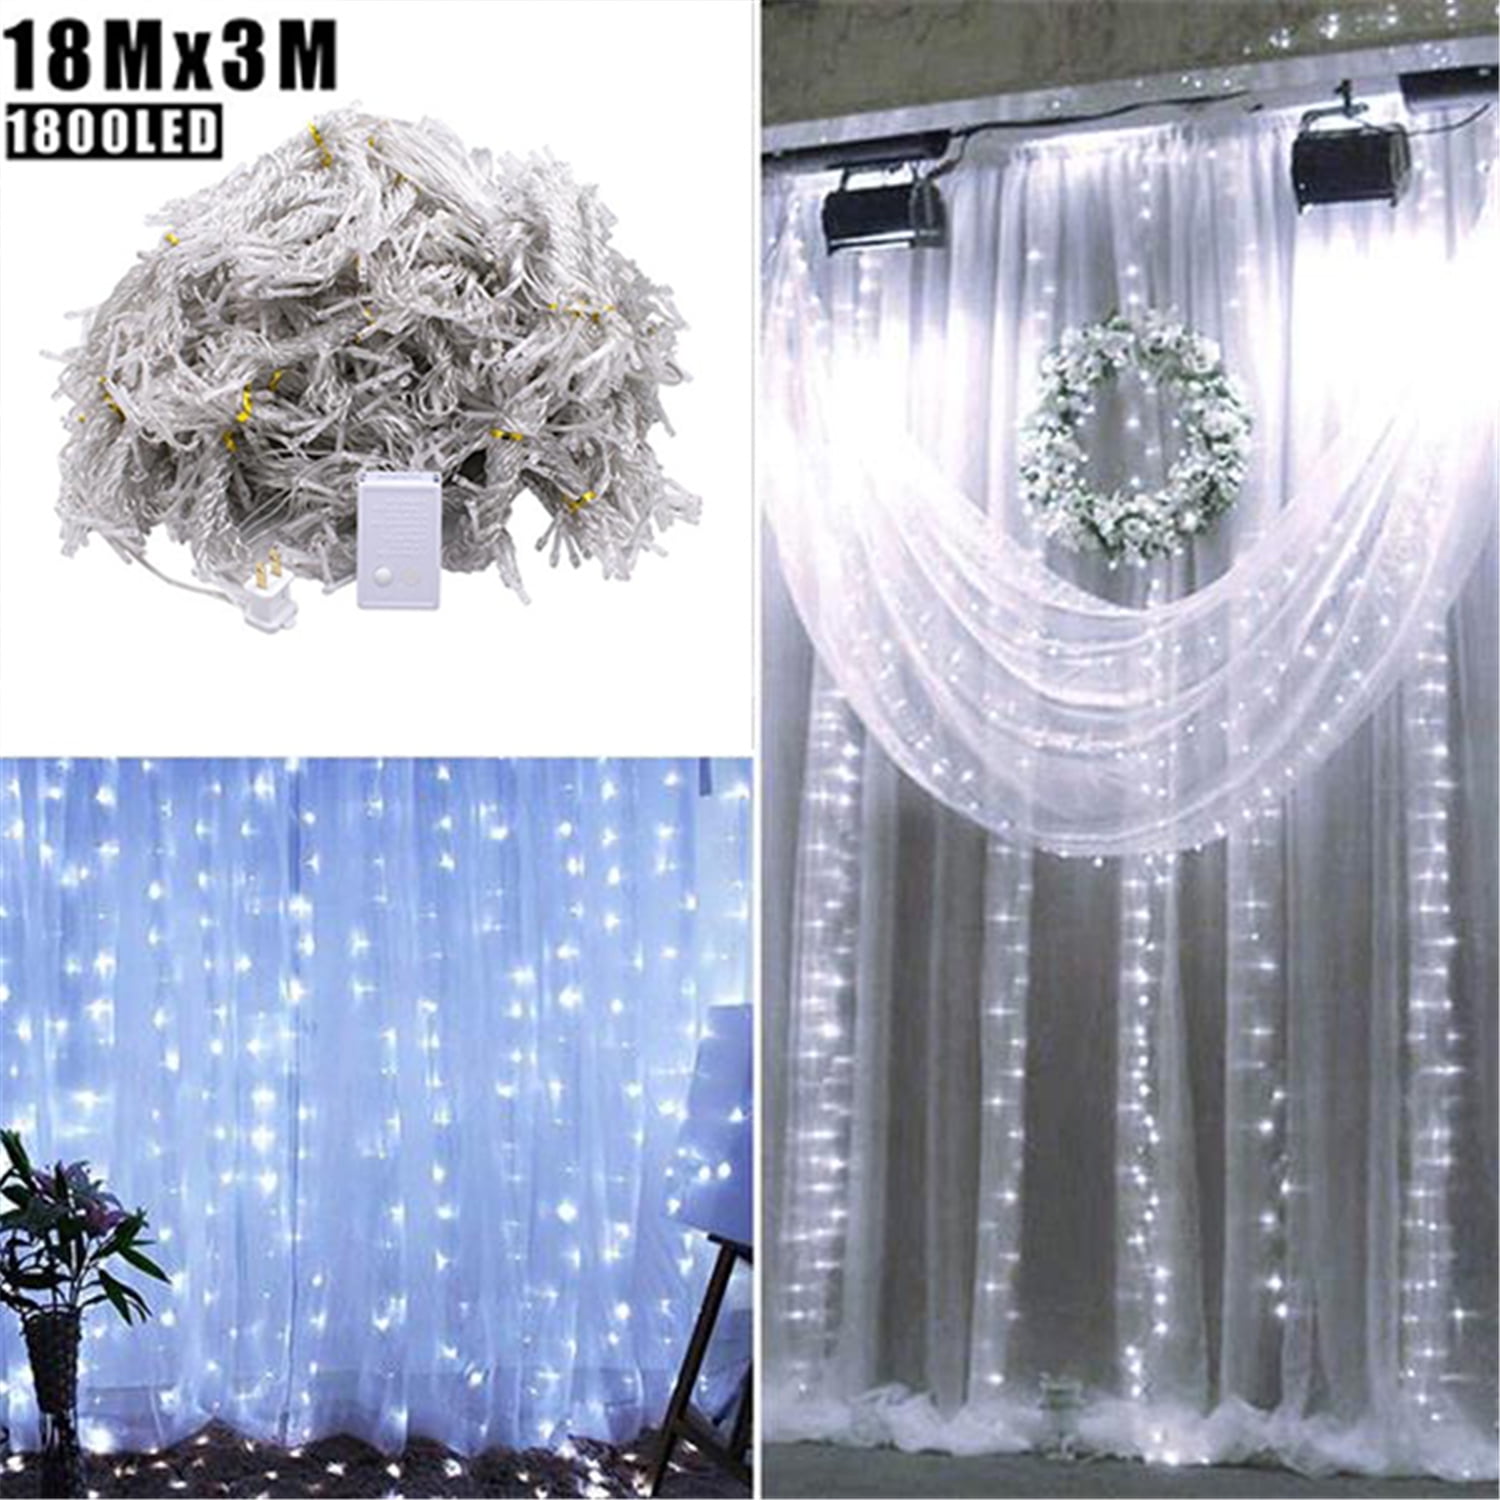 18M x 3M 1800-LED Warm White Light Romantic Christmas Wedding Outdoor Curtain 